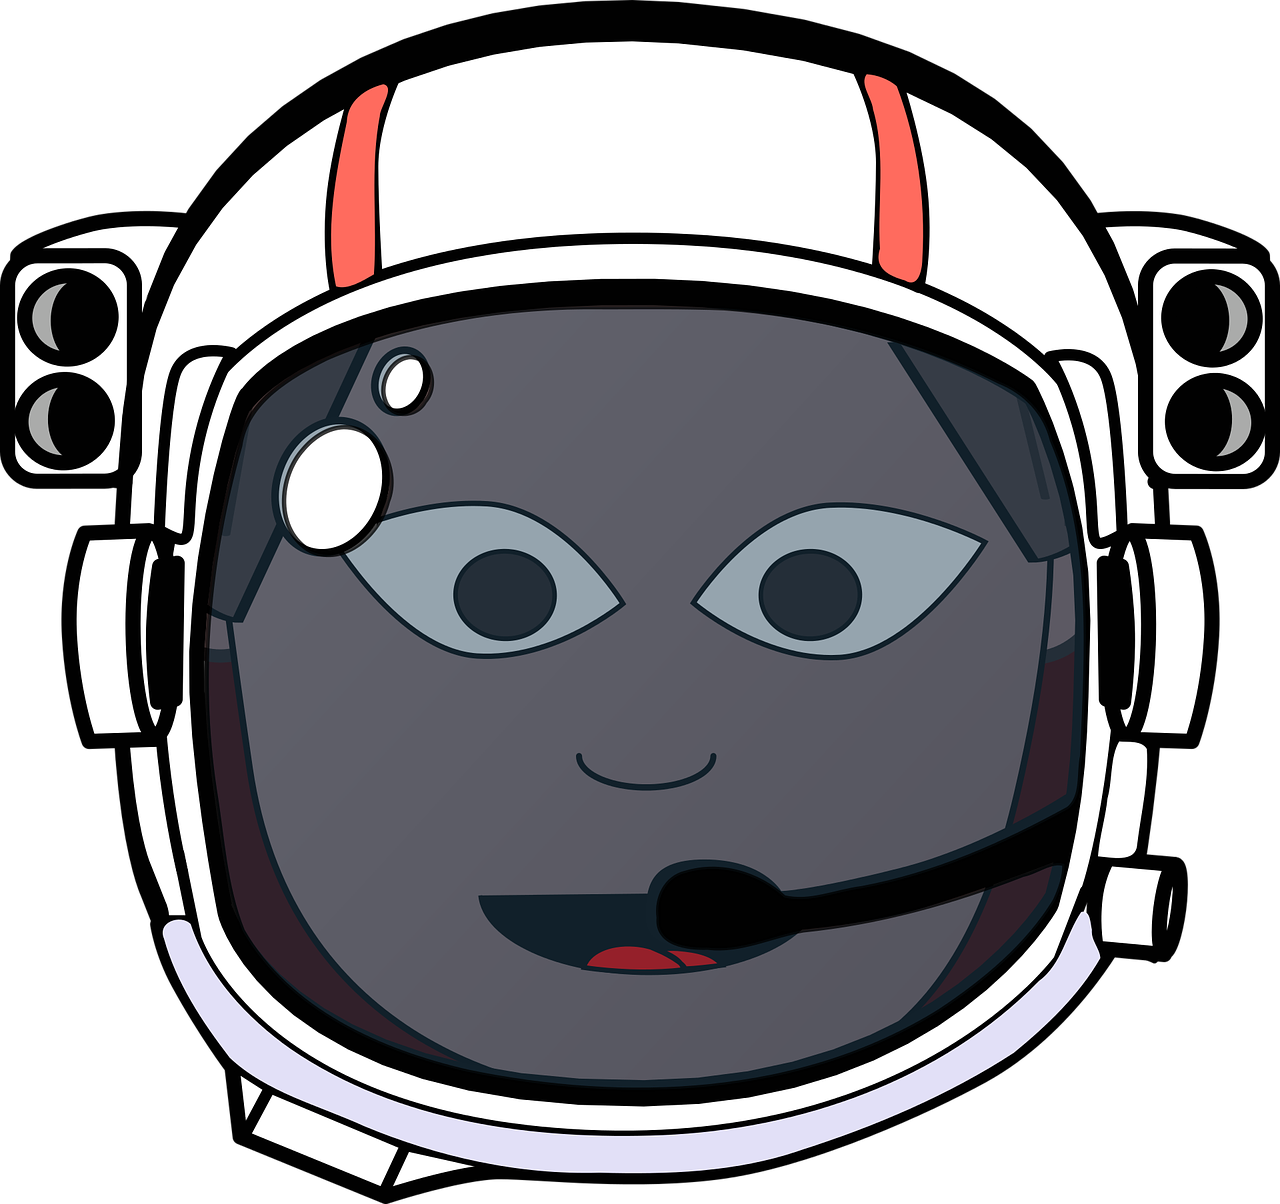 Astronaut Helmet PNG Image File